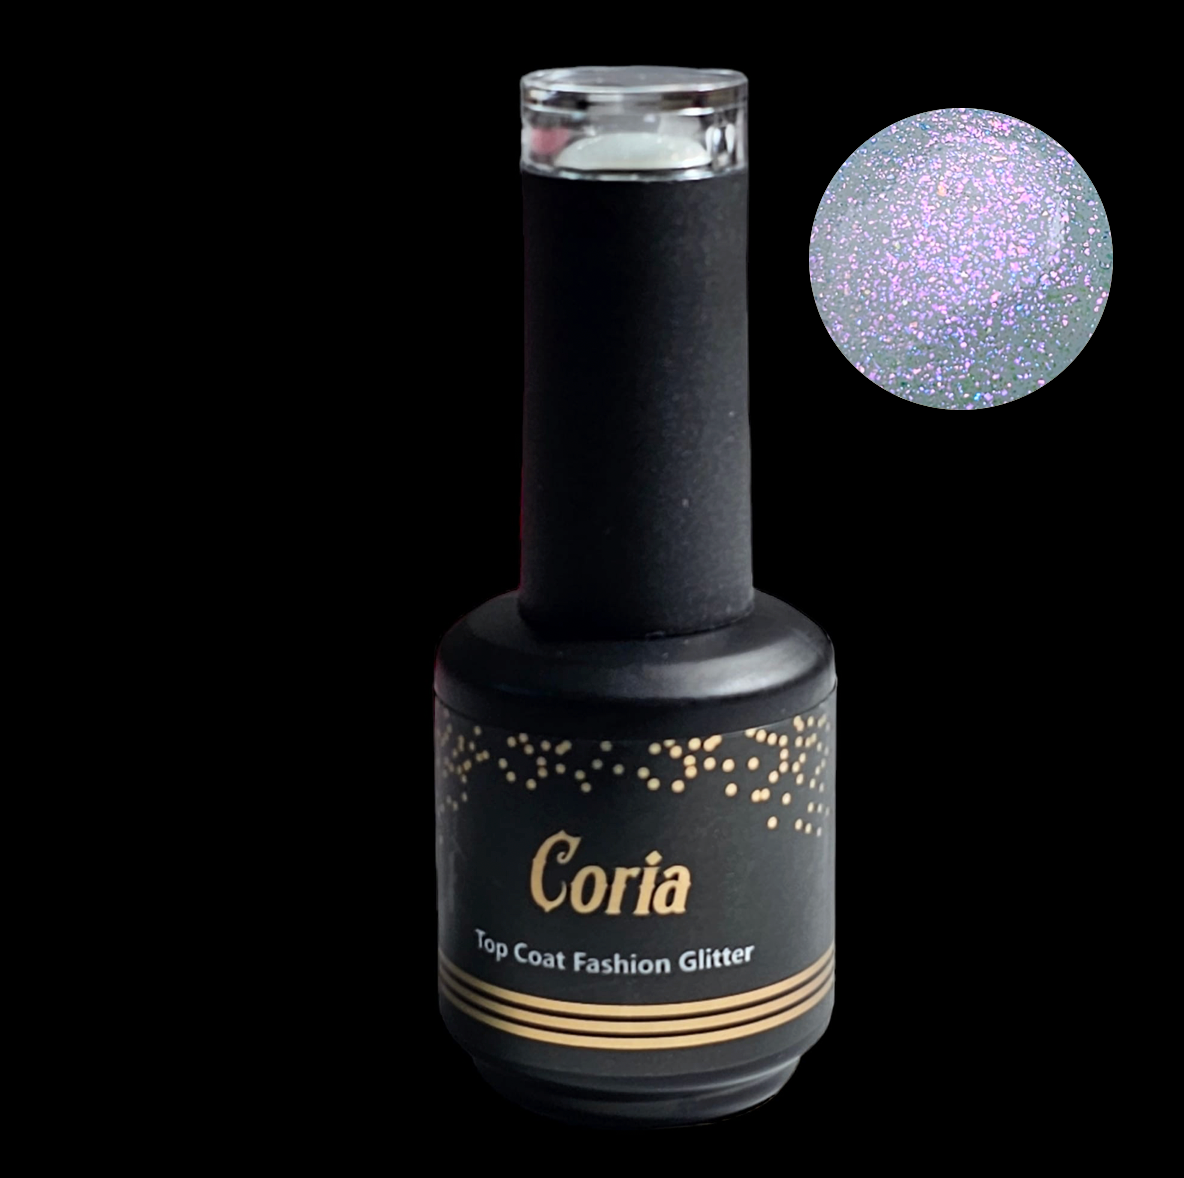 Top Coat Fashion Glitter Coria 15 ml 104